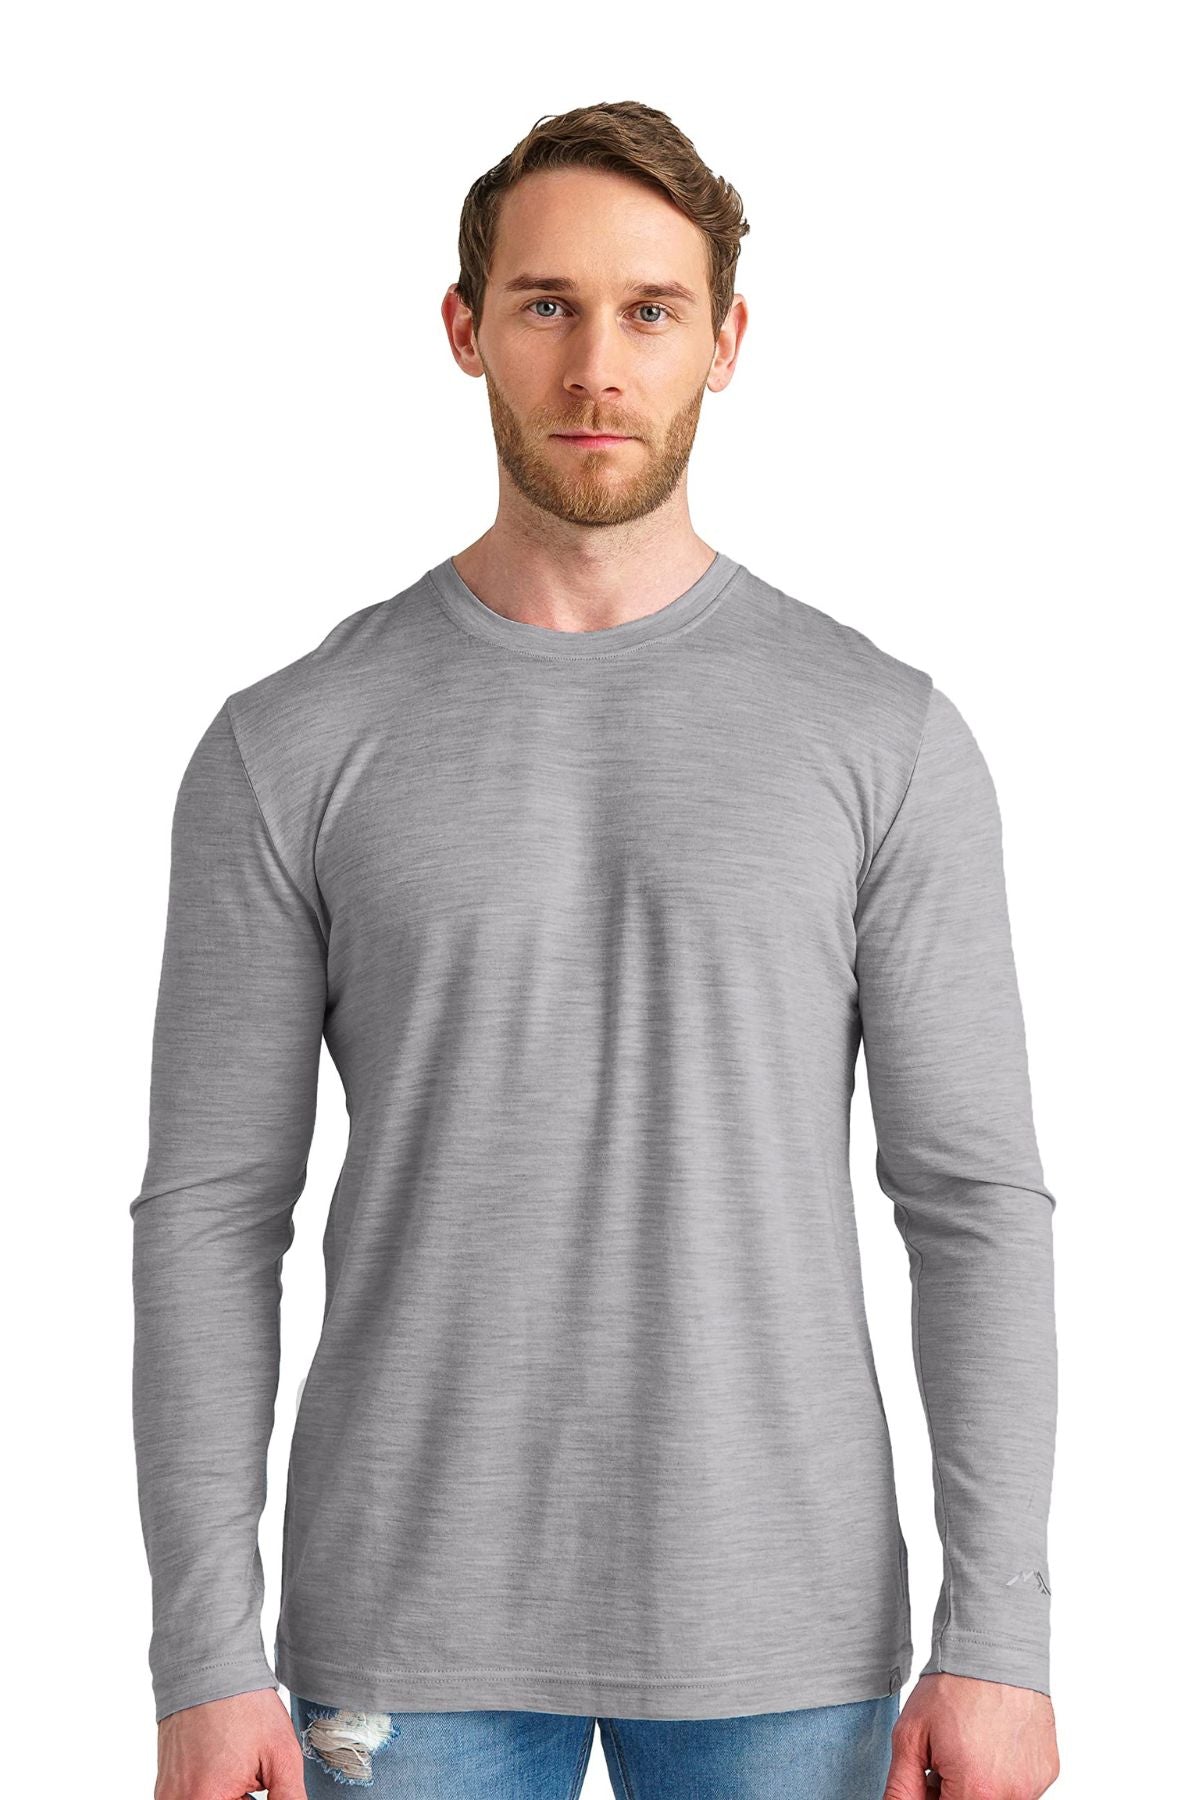 Men's Merino Long Sleeve 165 Heathered Grey